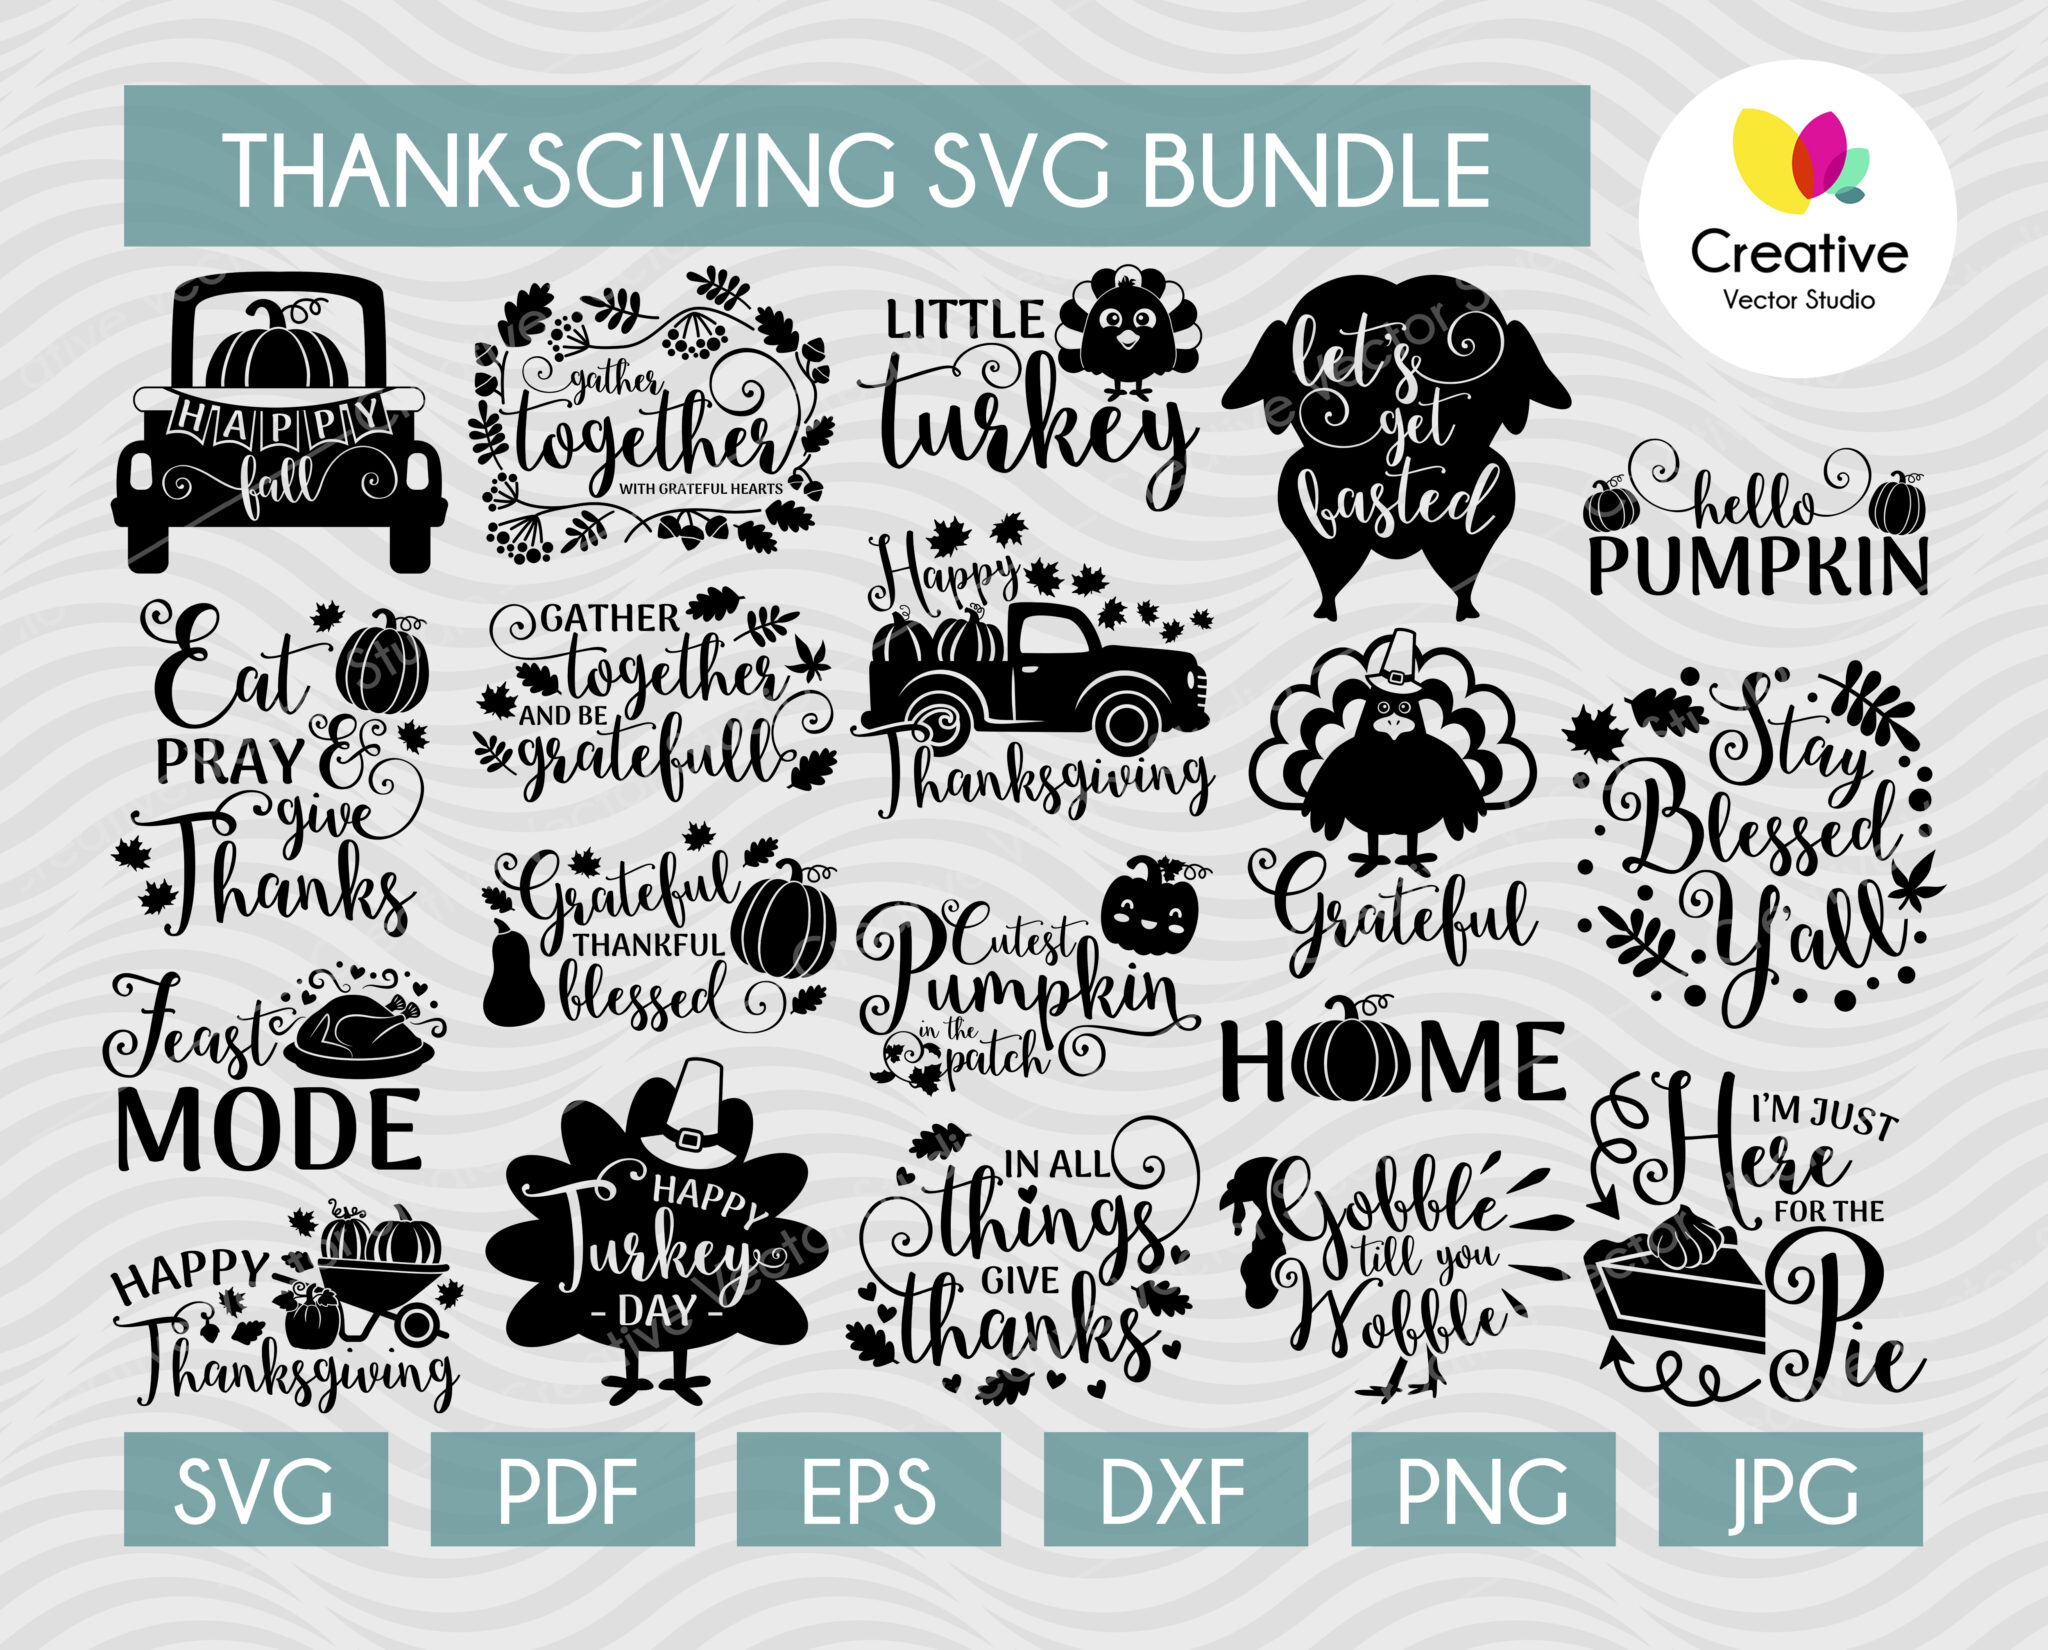 Fall Thanksgiving SVG Bundle - Creative Vector Studio